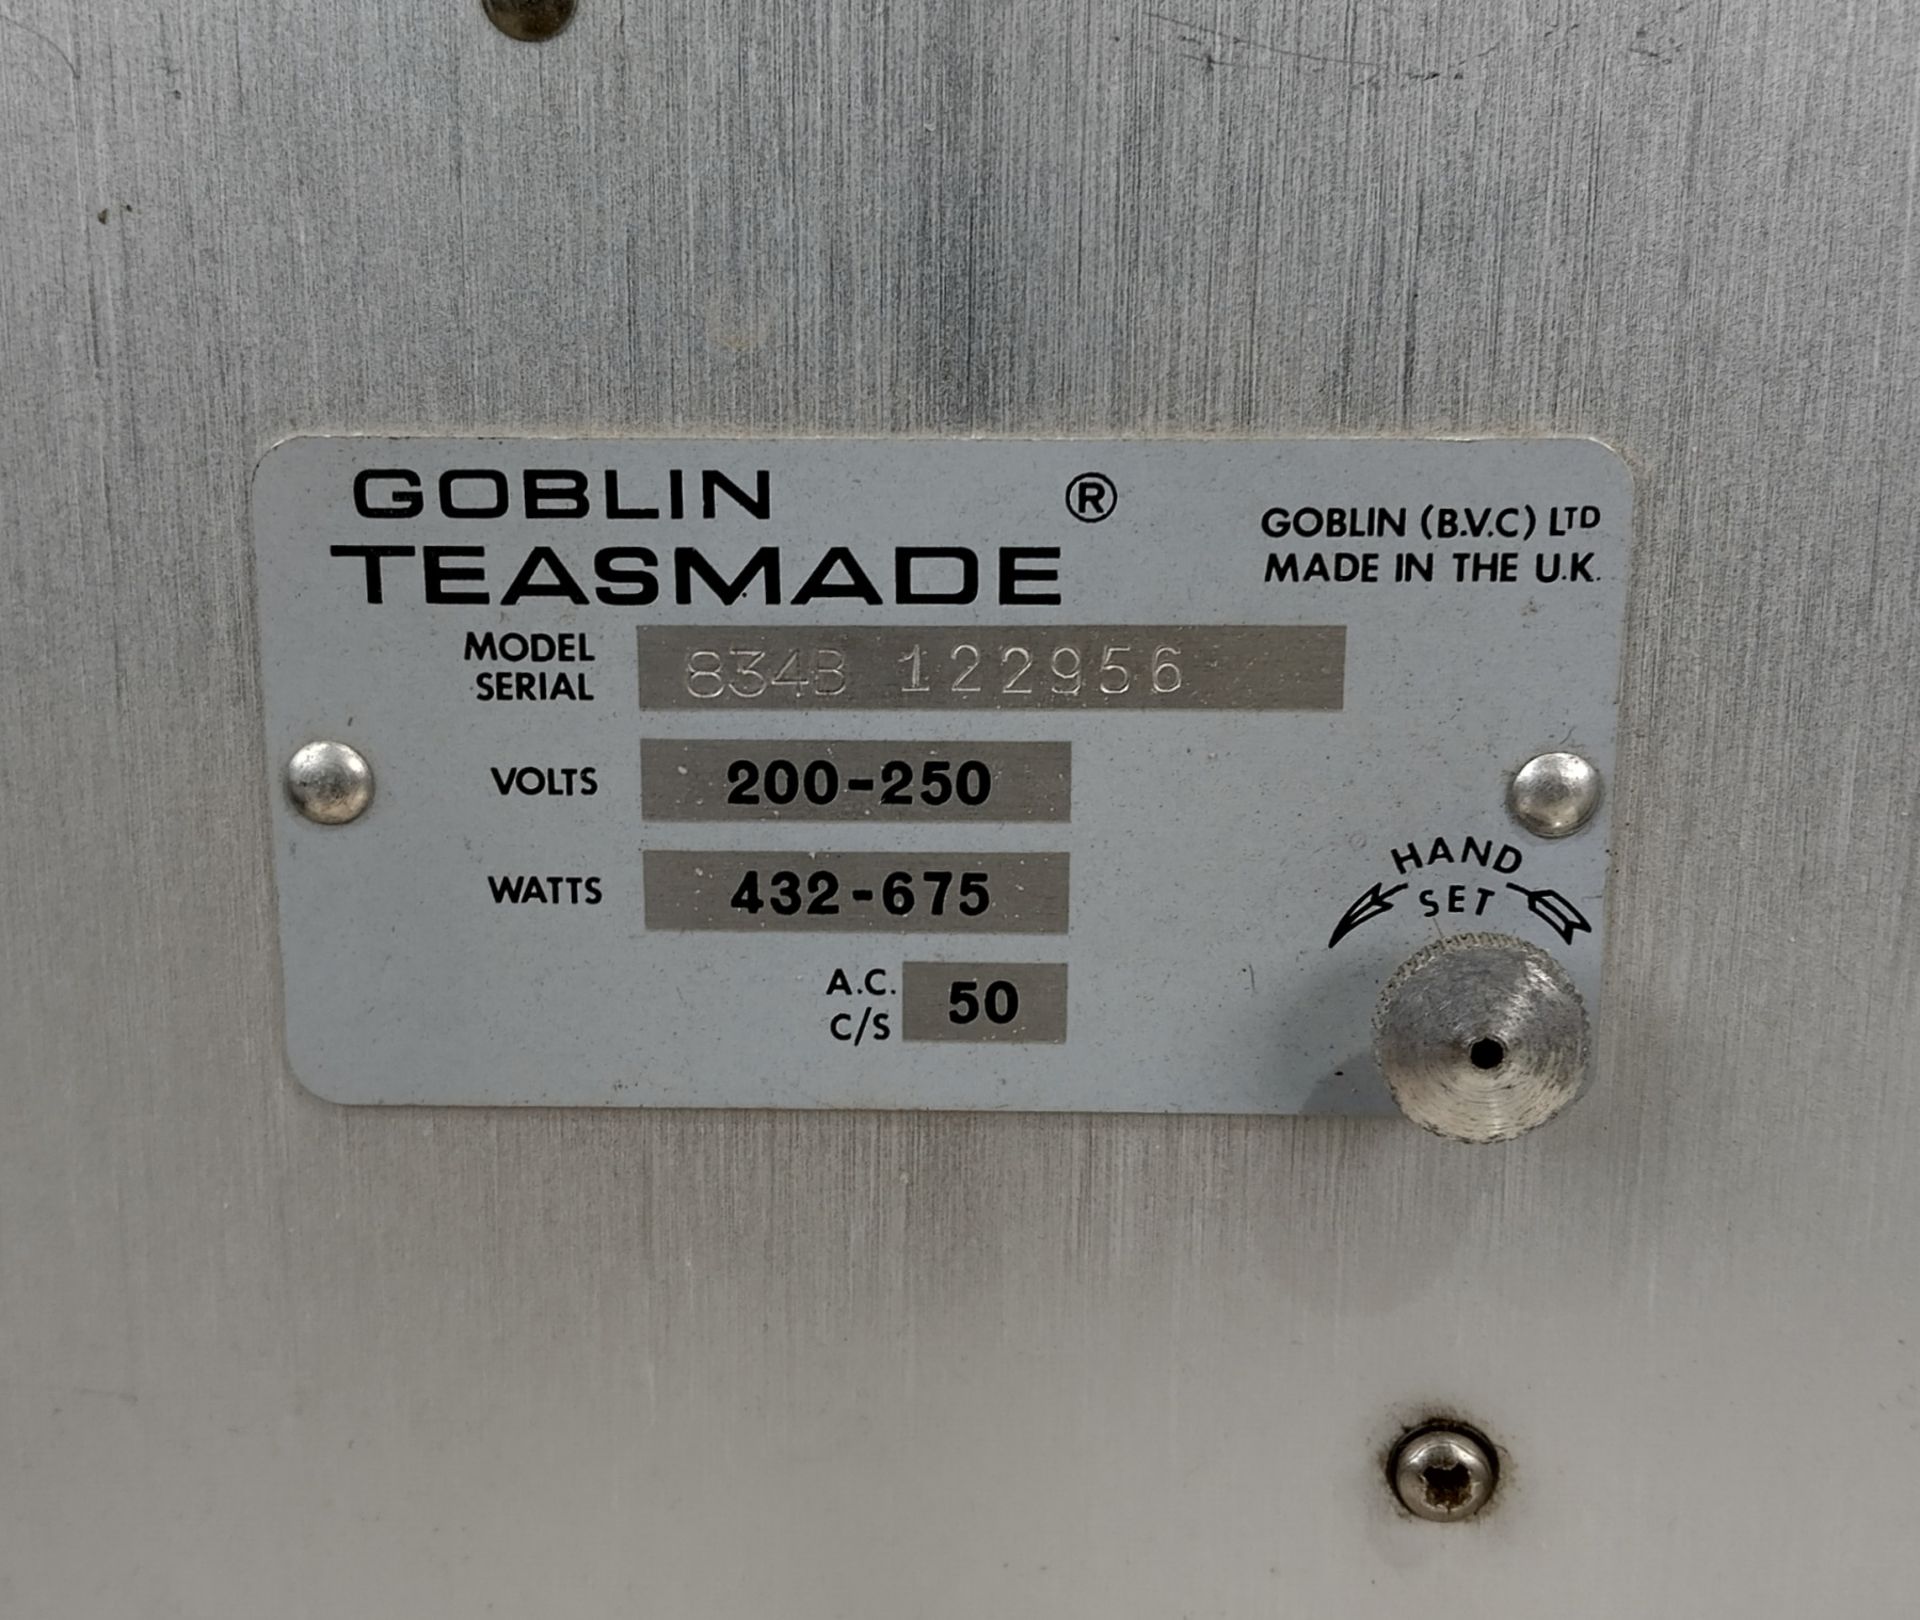 Goblin Teasmade 834B - clock and tea maker - Image 5 of 8